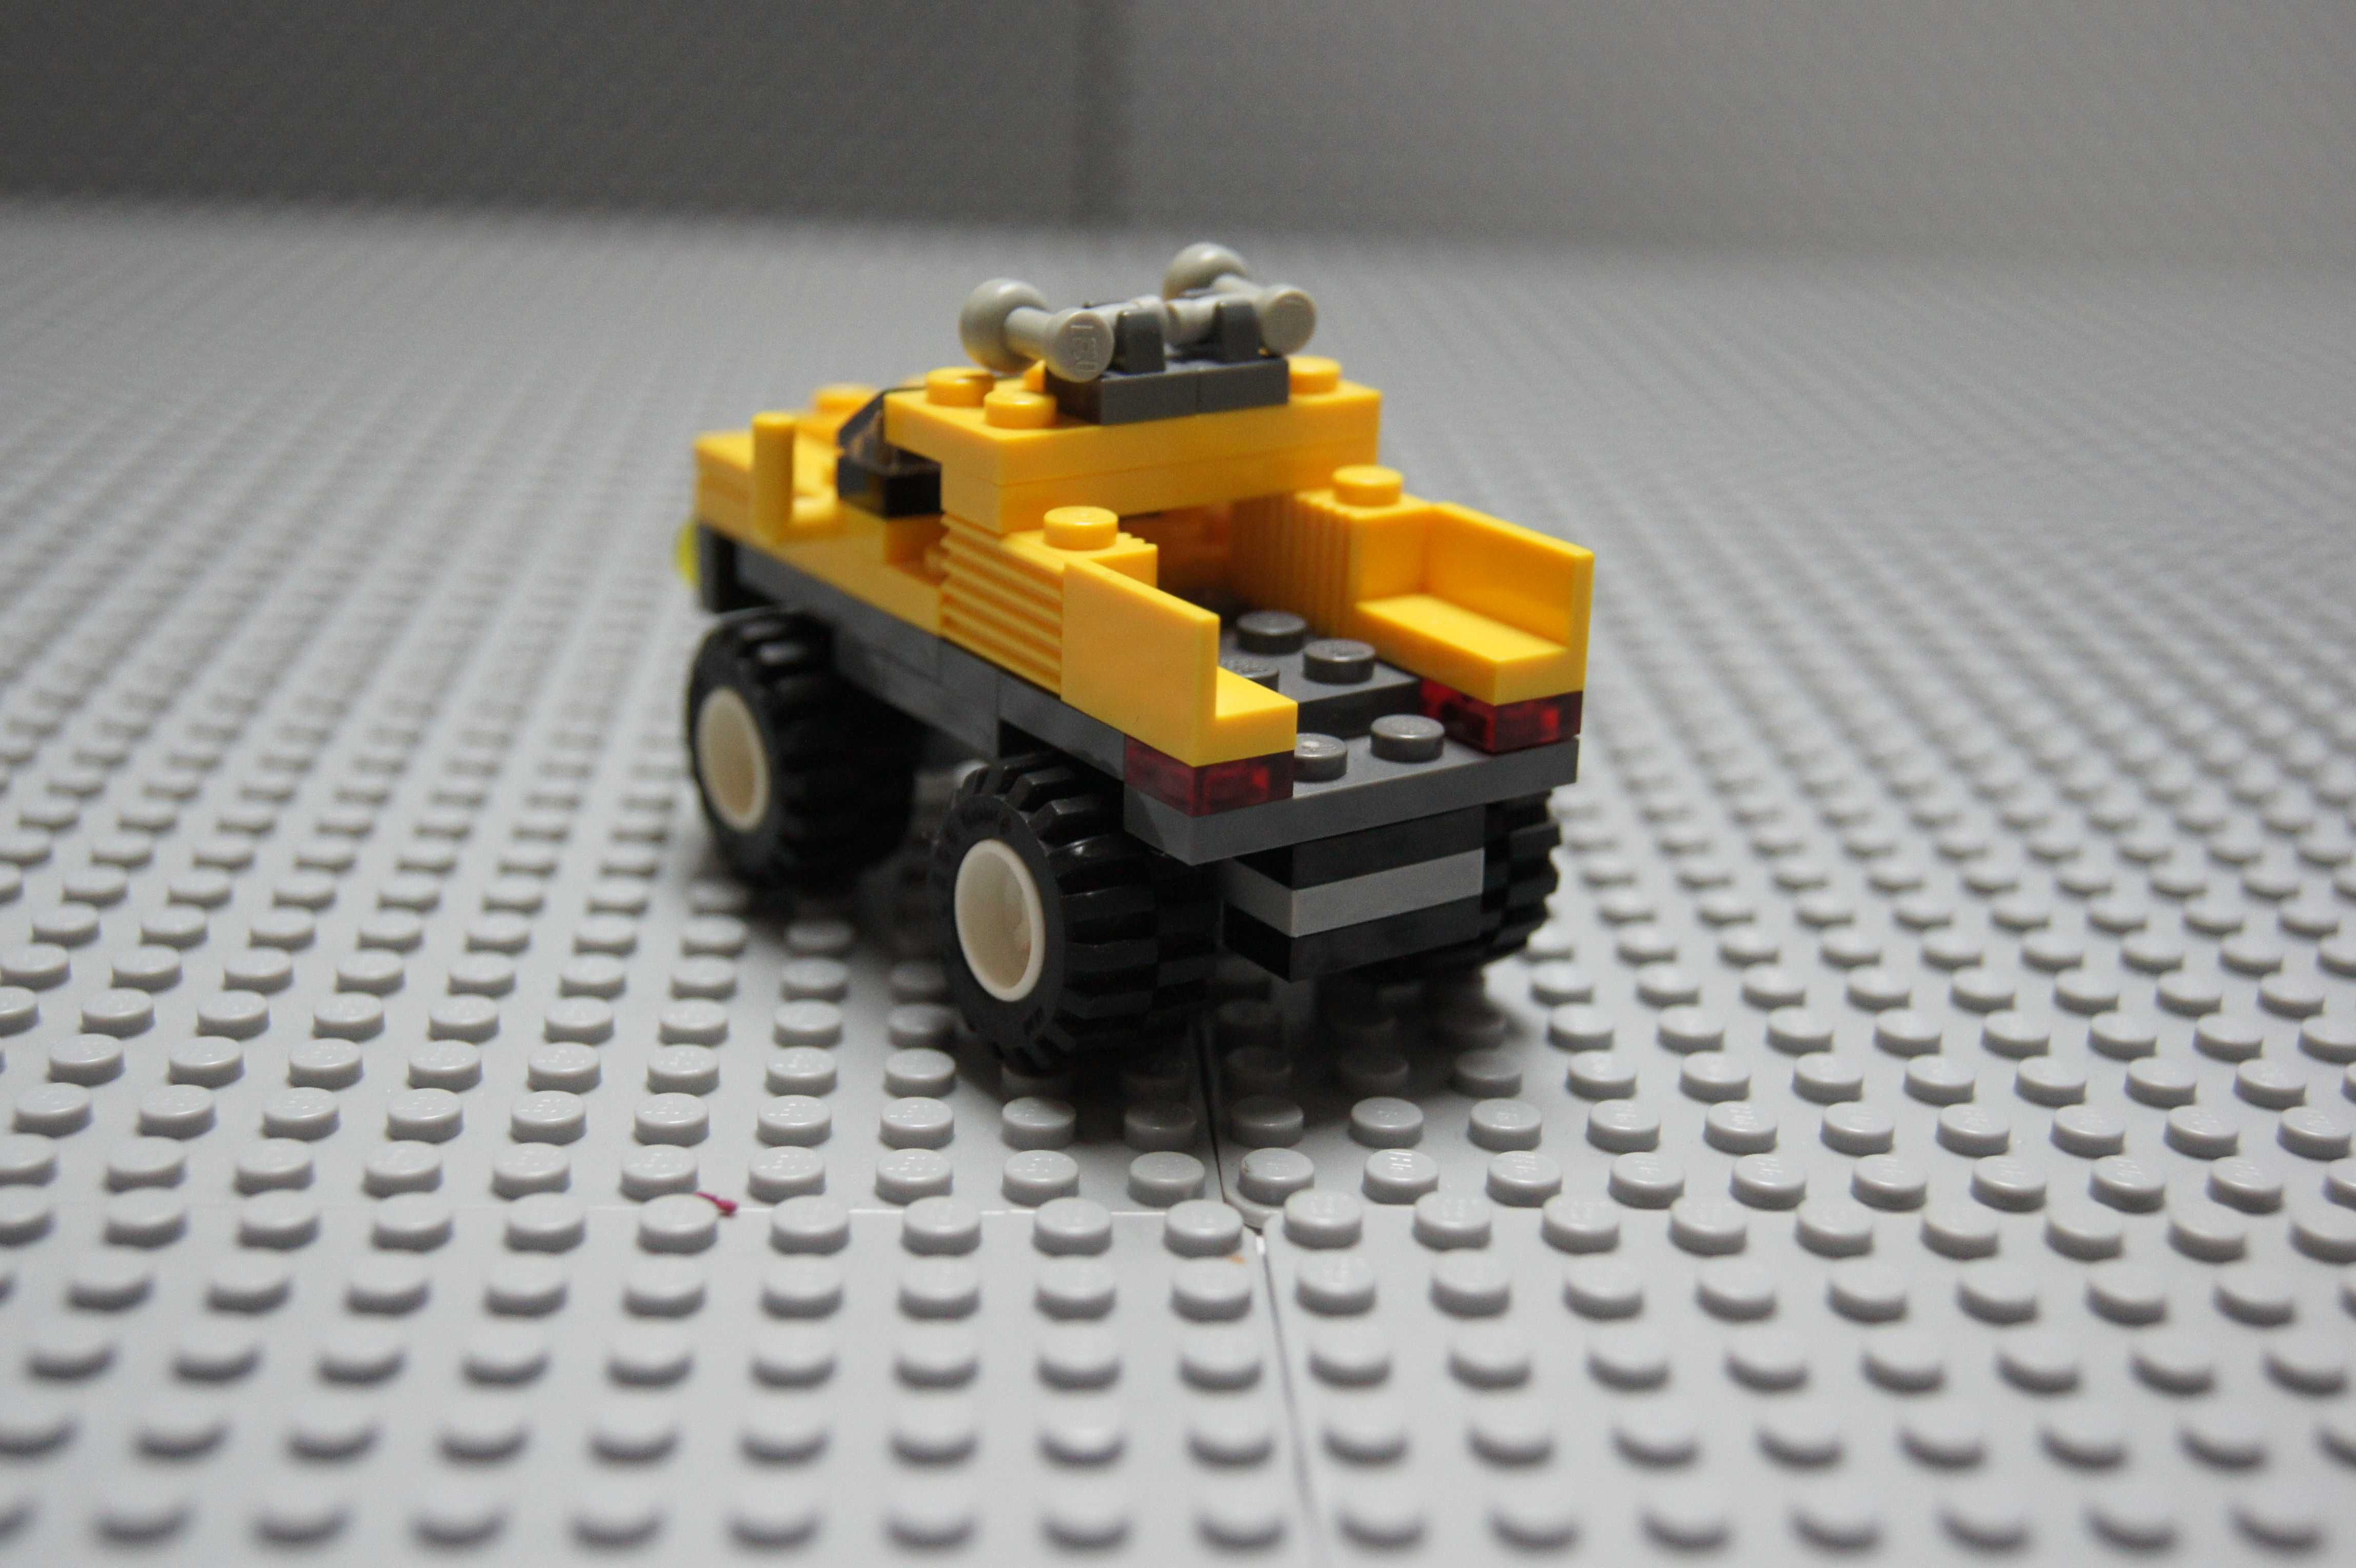 Lego Creator 6742